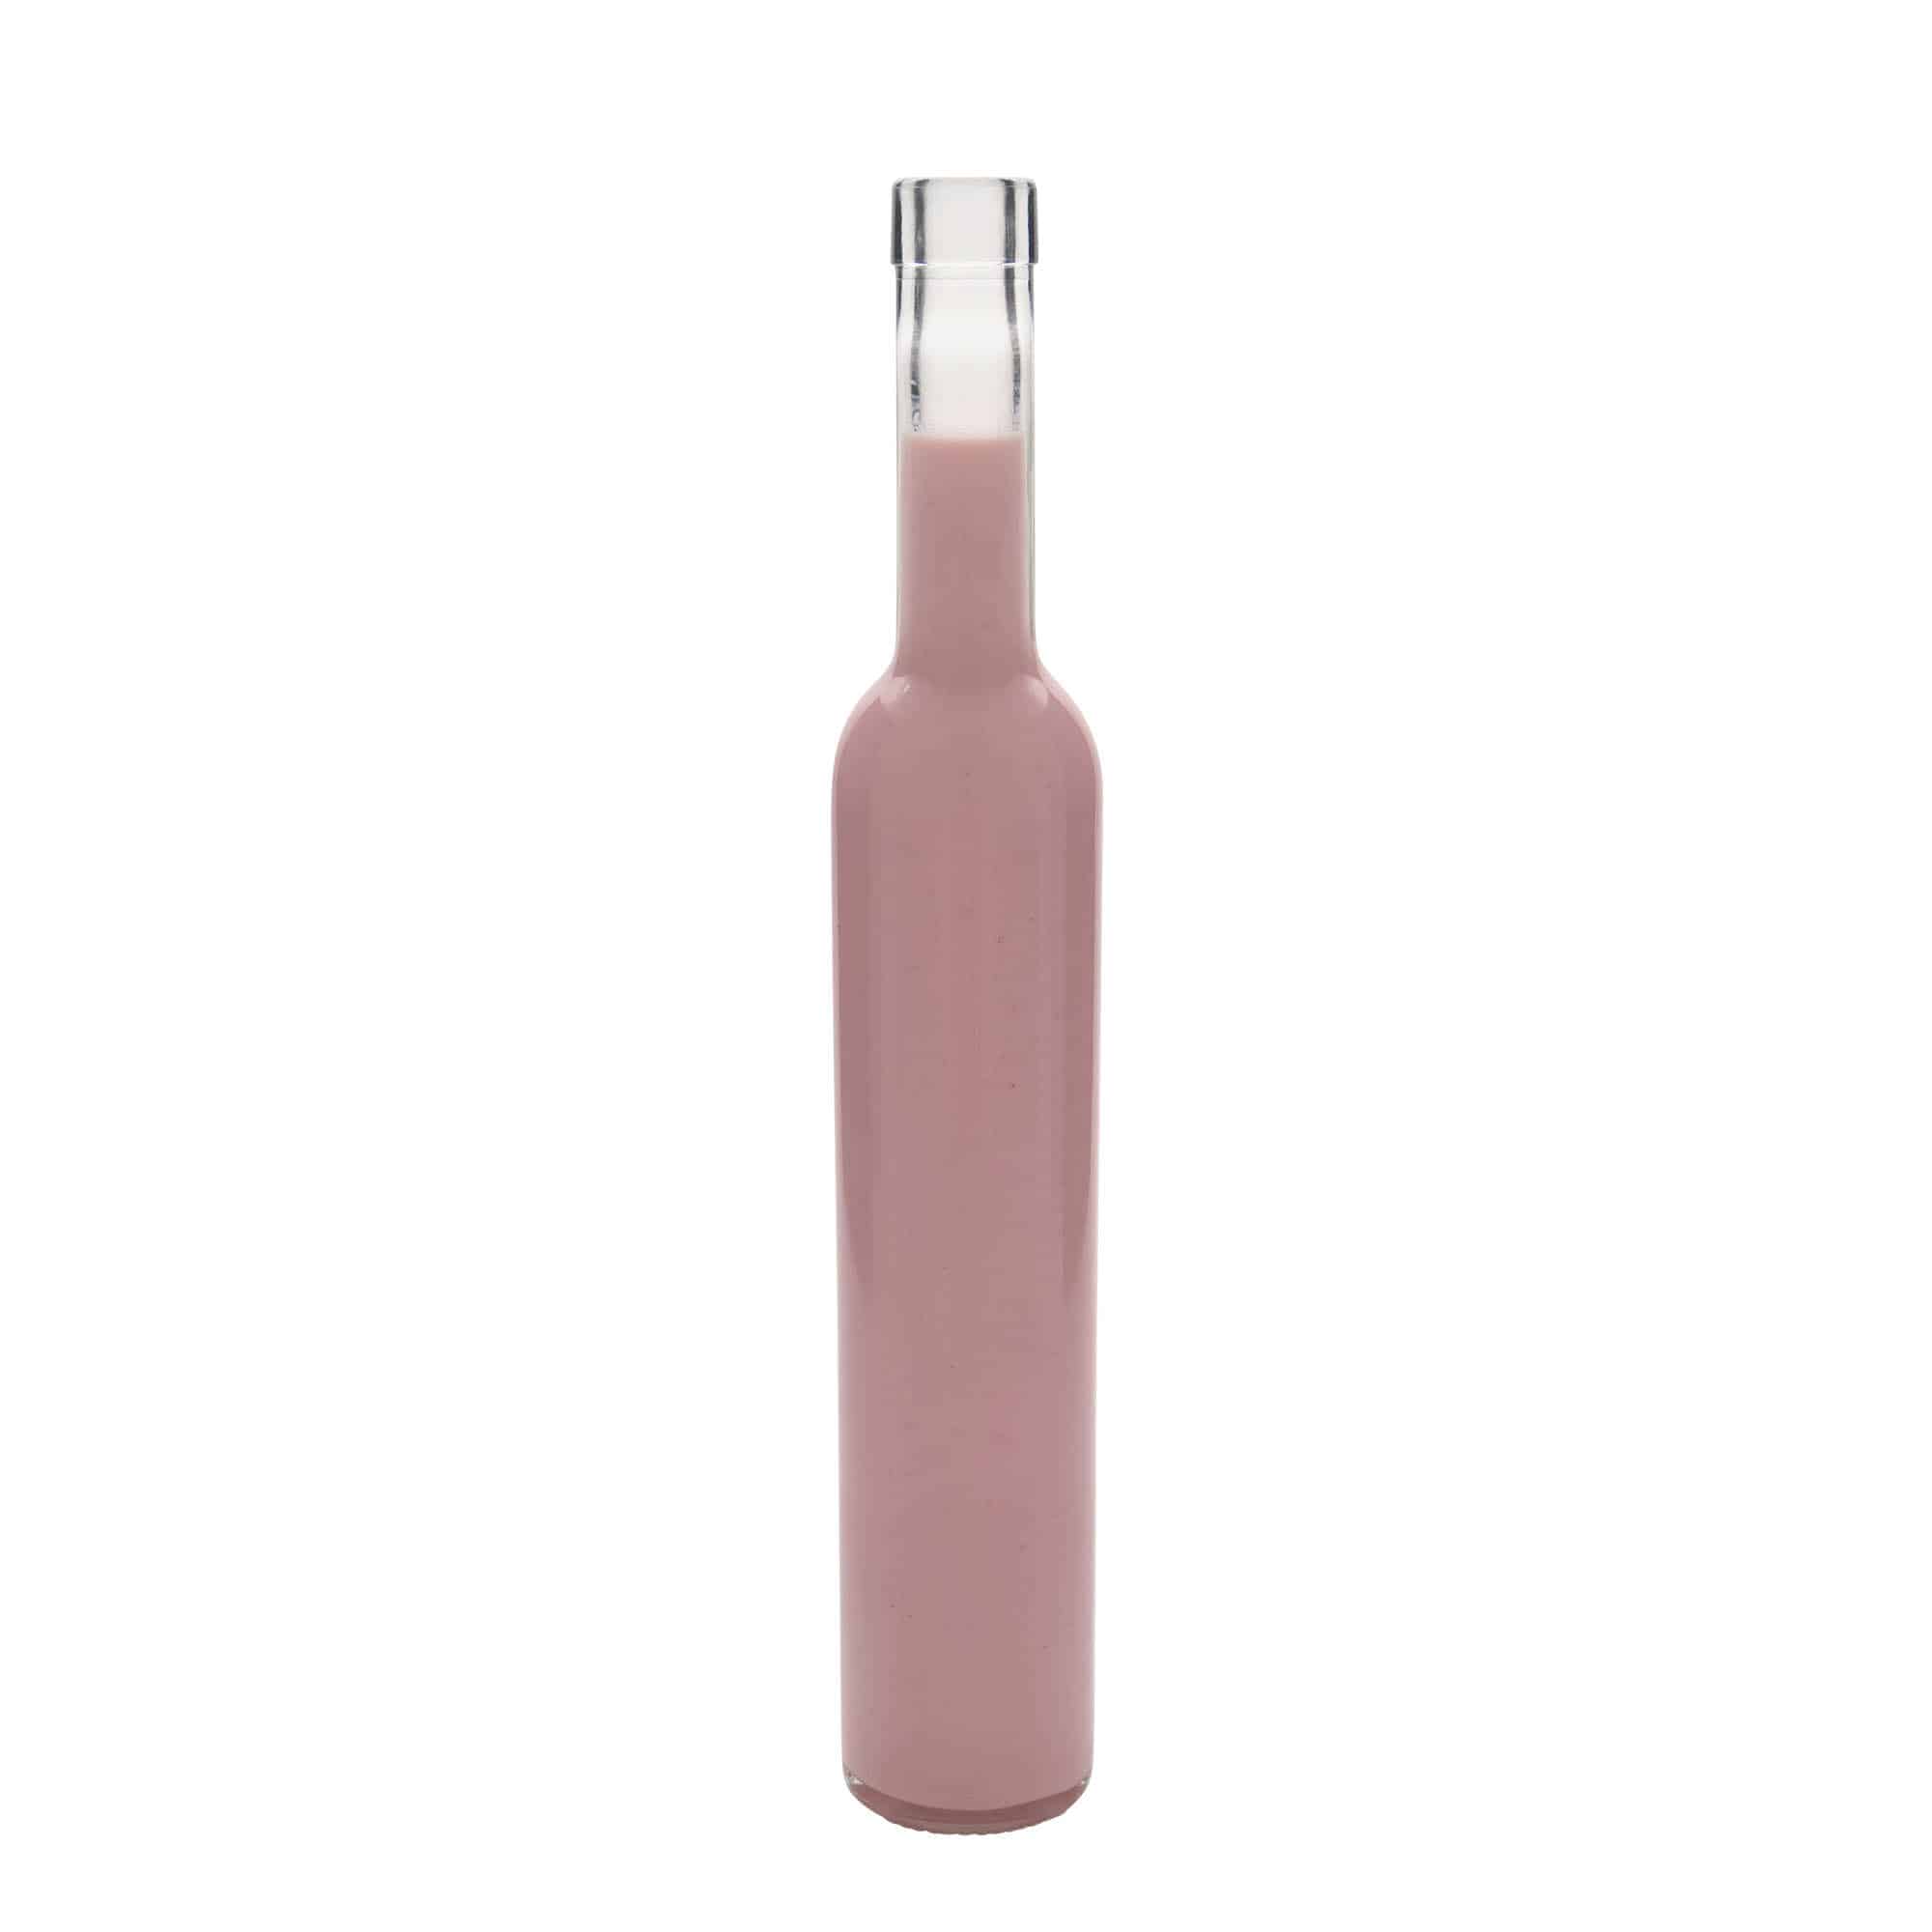 500 ml glass bottle 'Maximo', closure: cork